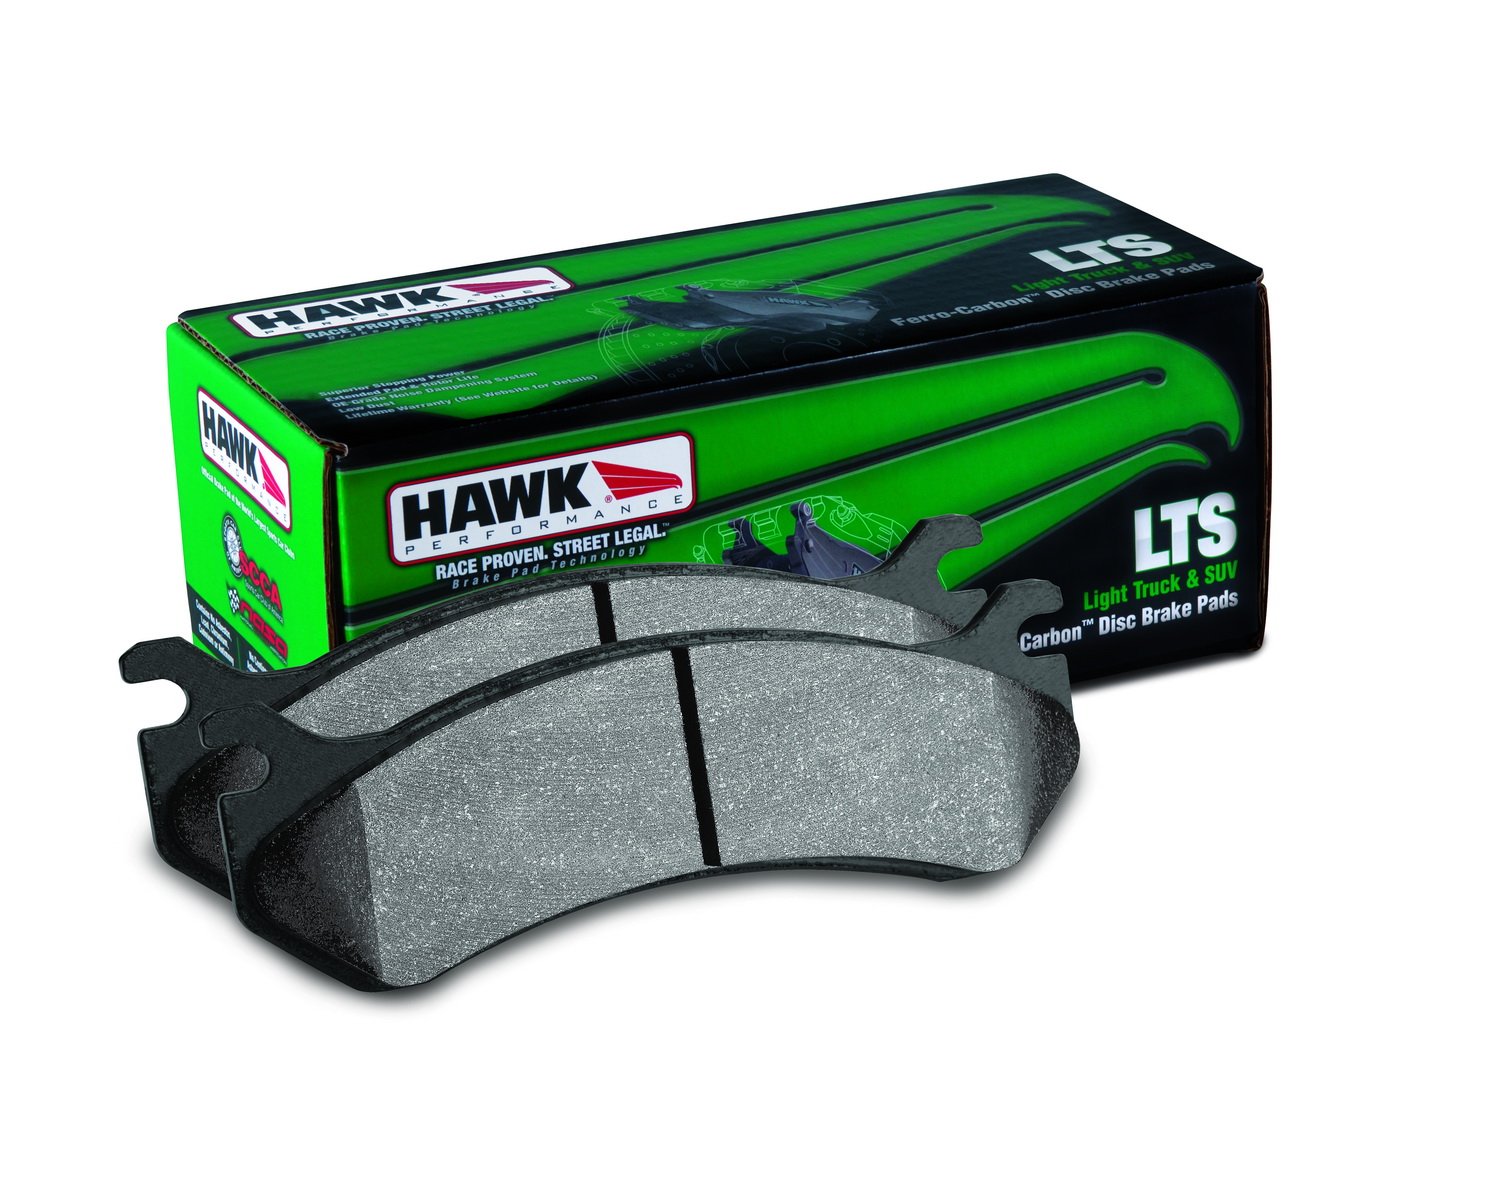 Hawk LTS Ferro Carbon Disc Brake Pads